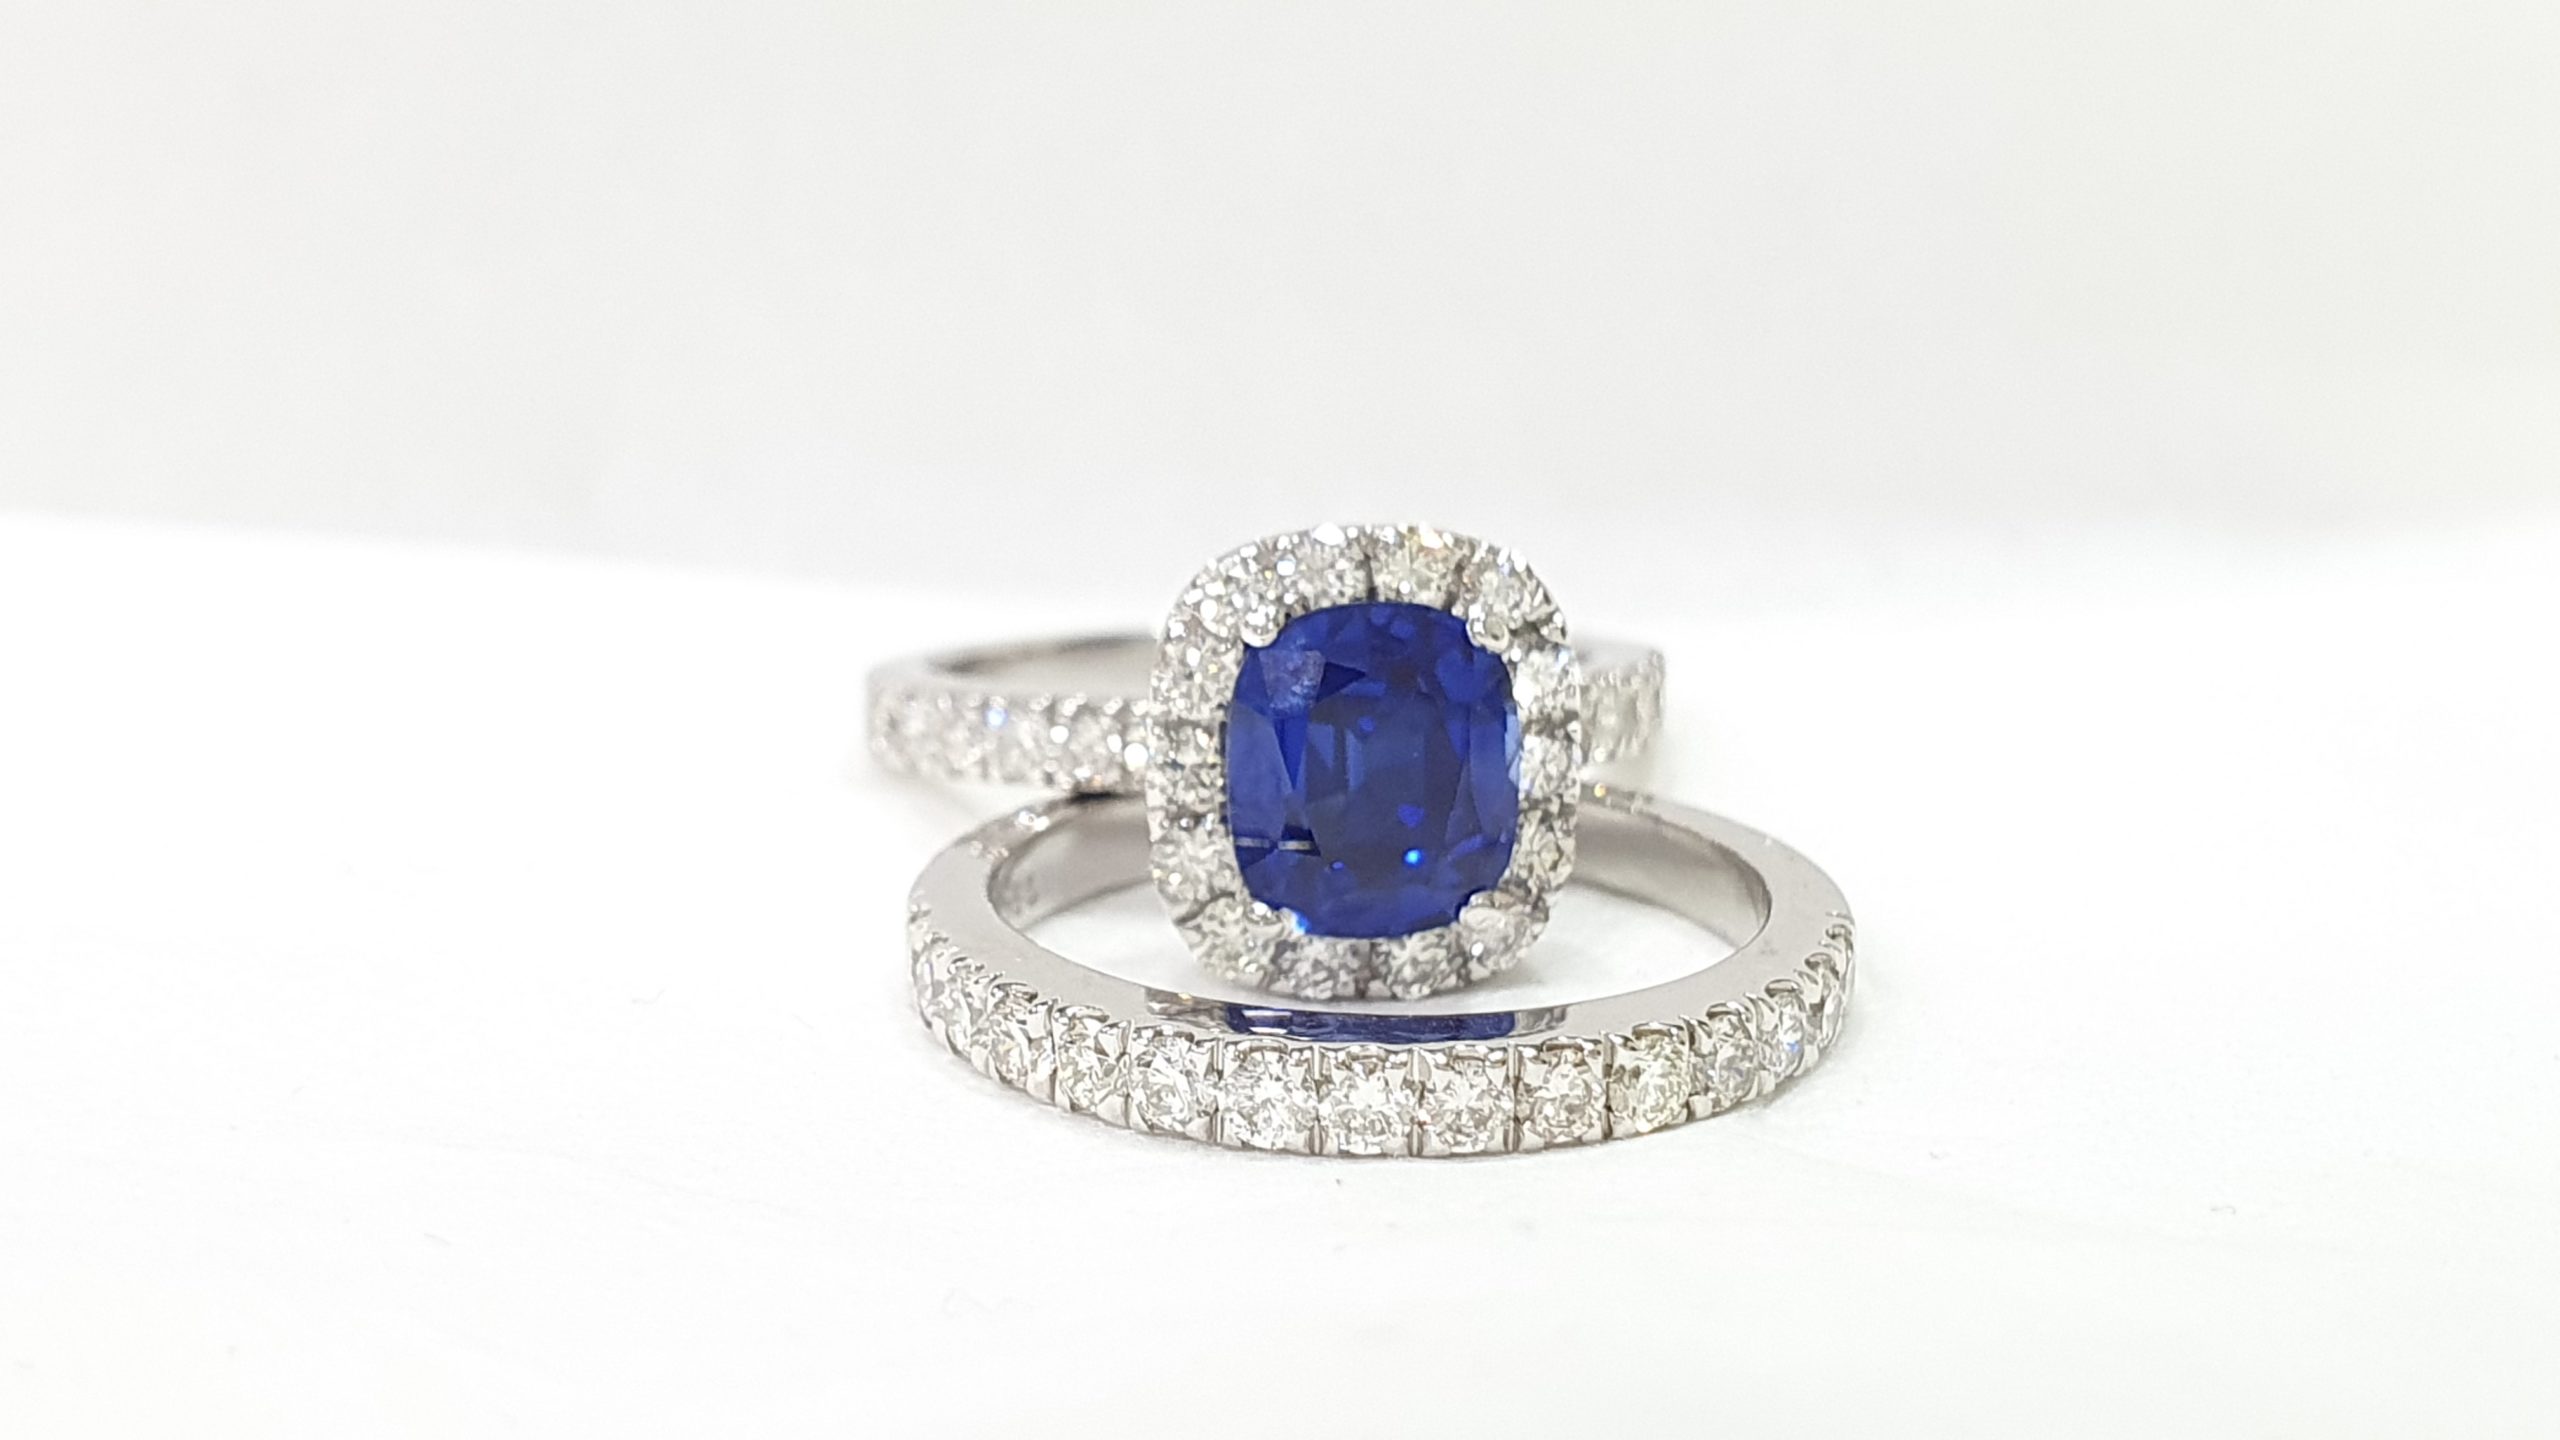 Buy Trinity Rings Online | BlueStone.com - India's #1 Online Jewellery Brand